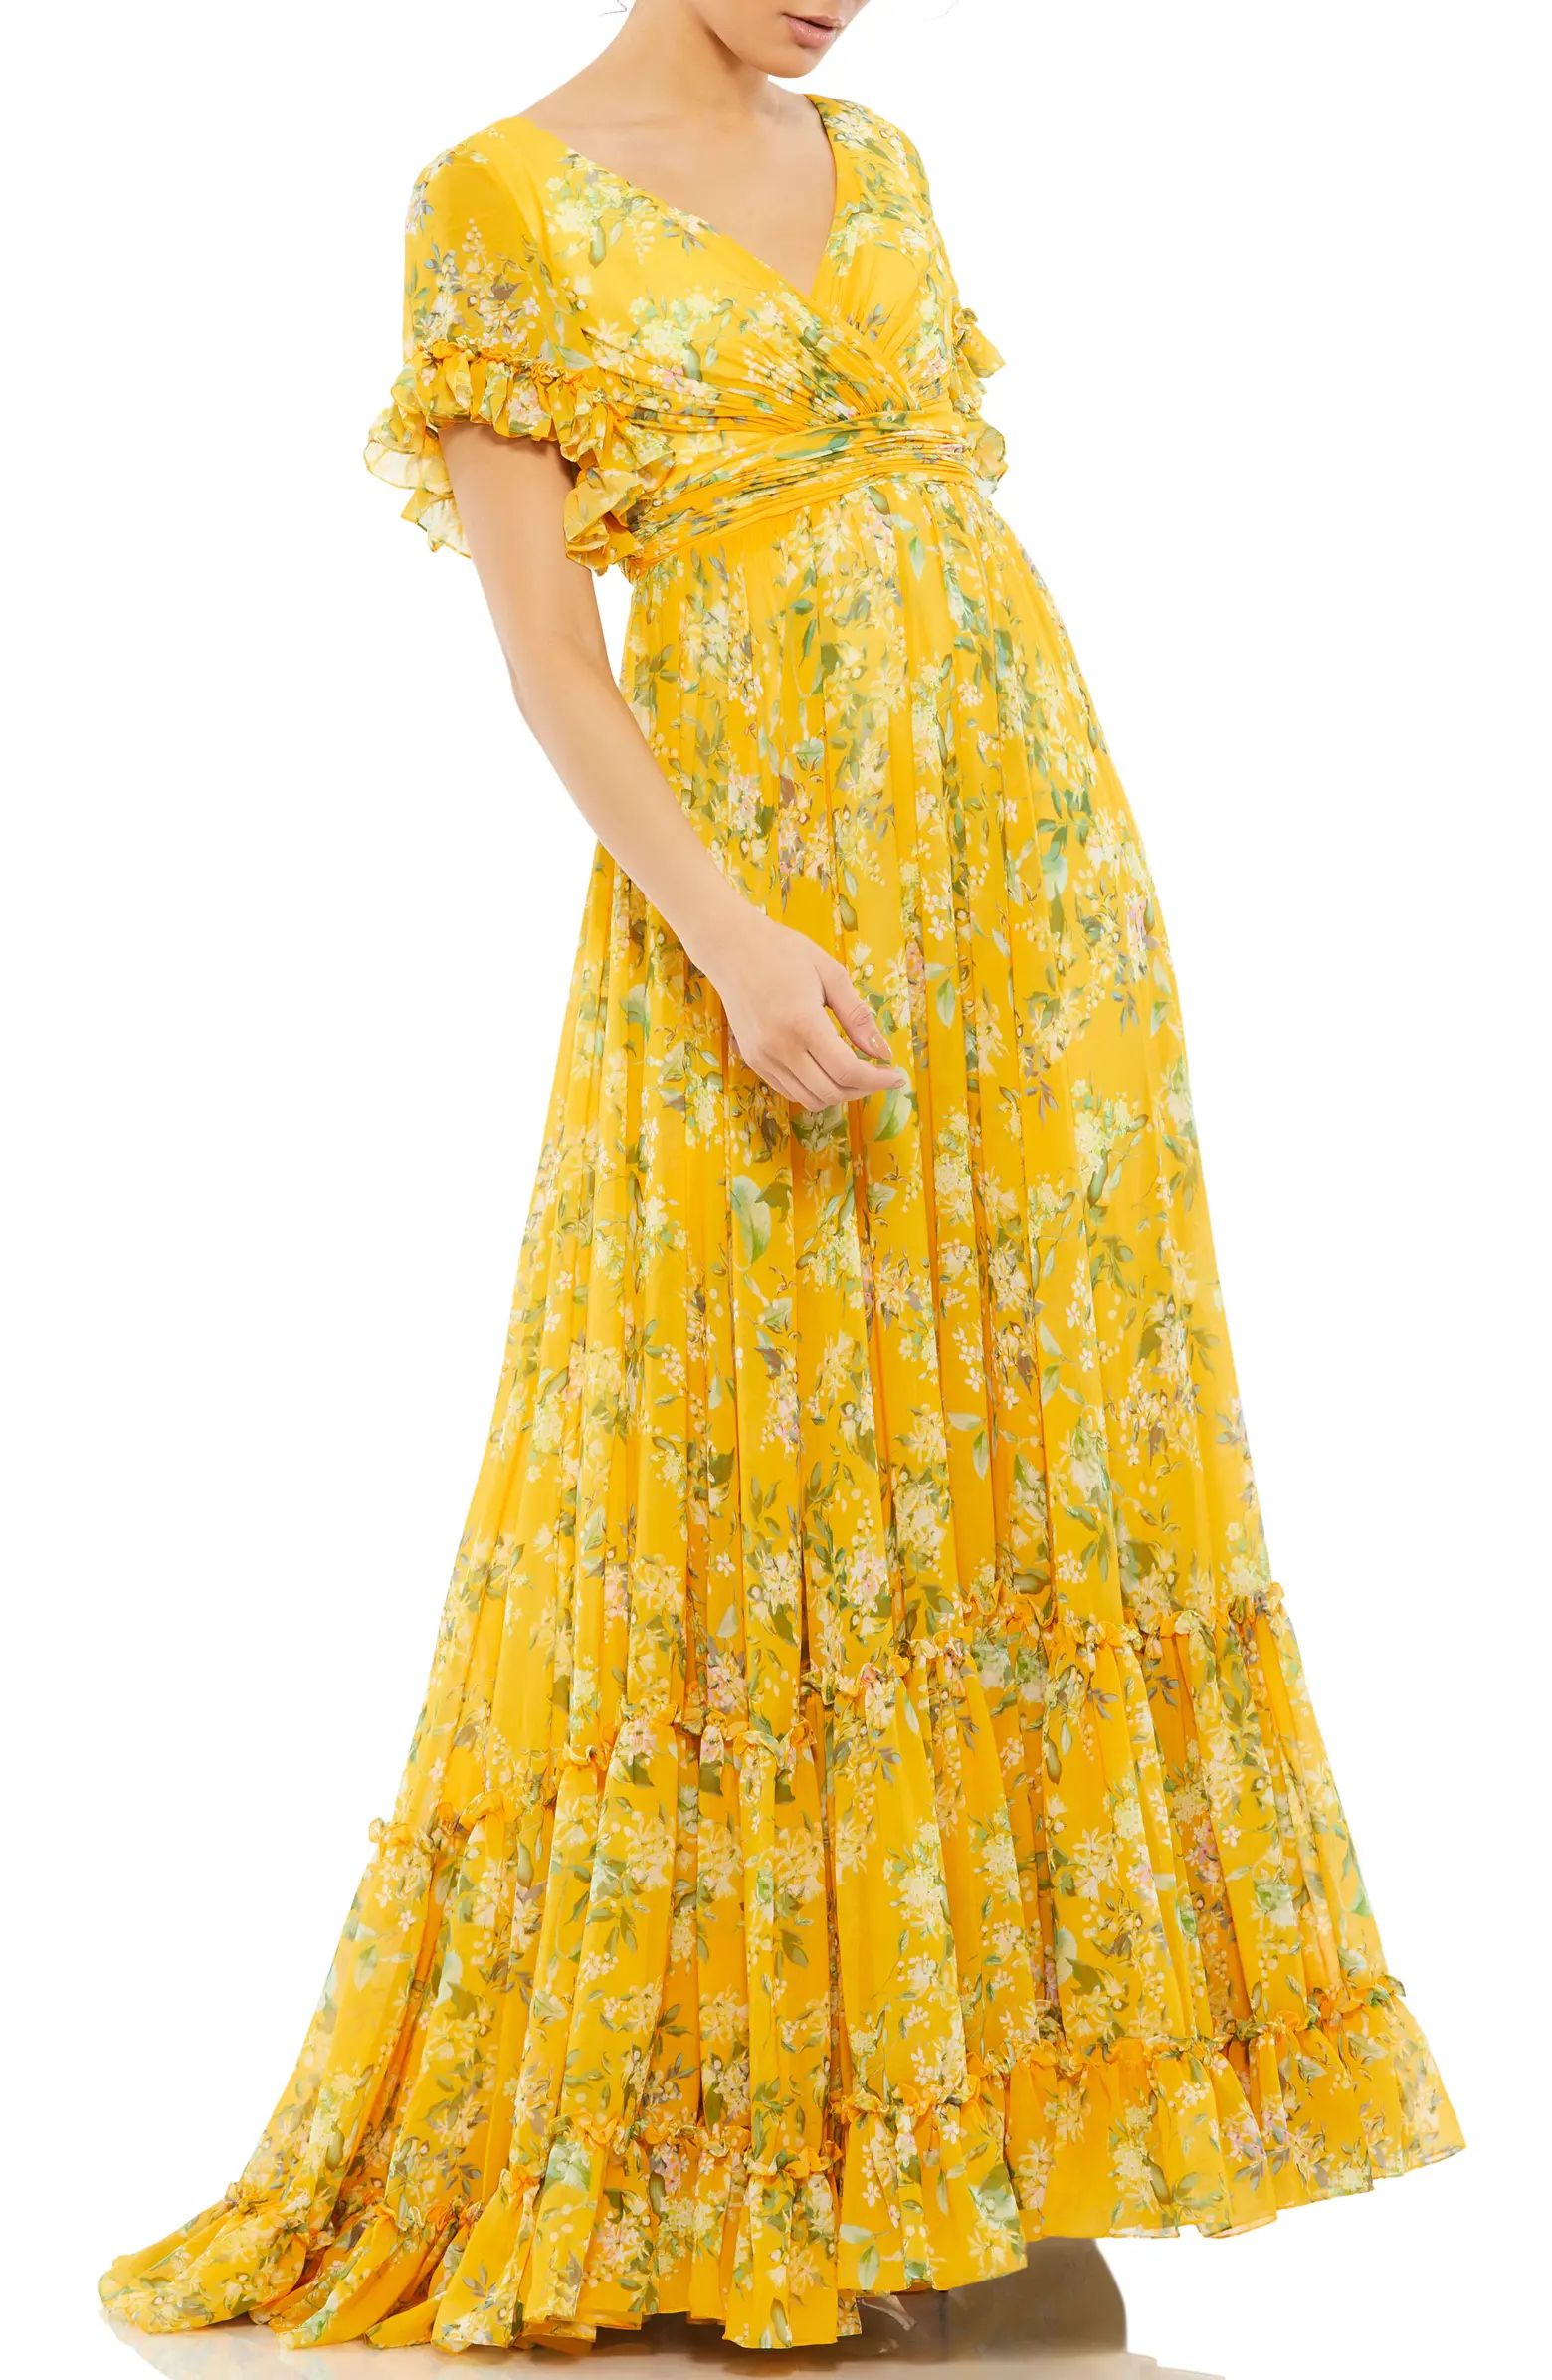 Floral Empire Waist Chiffon Gown | Nordstrom